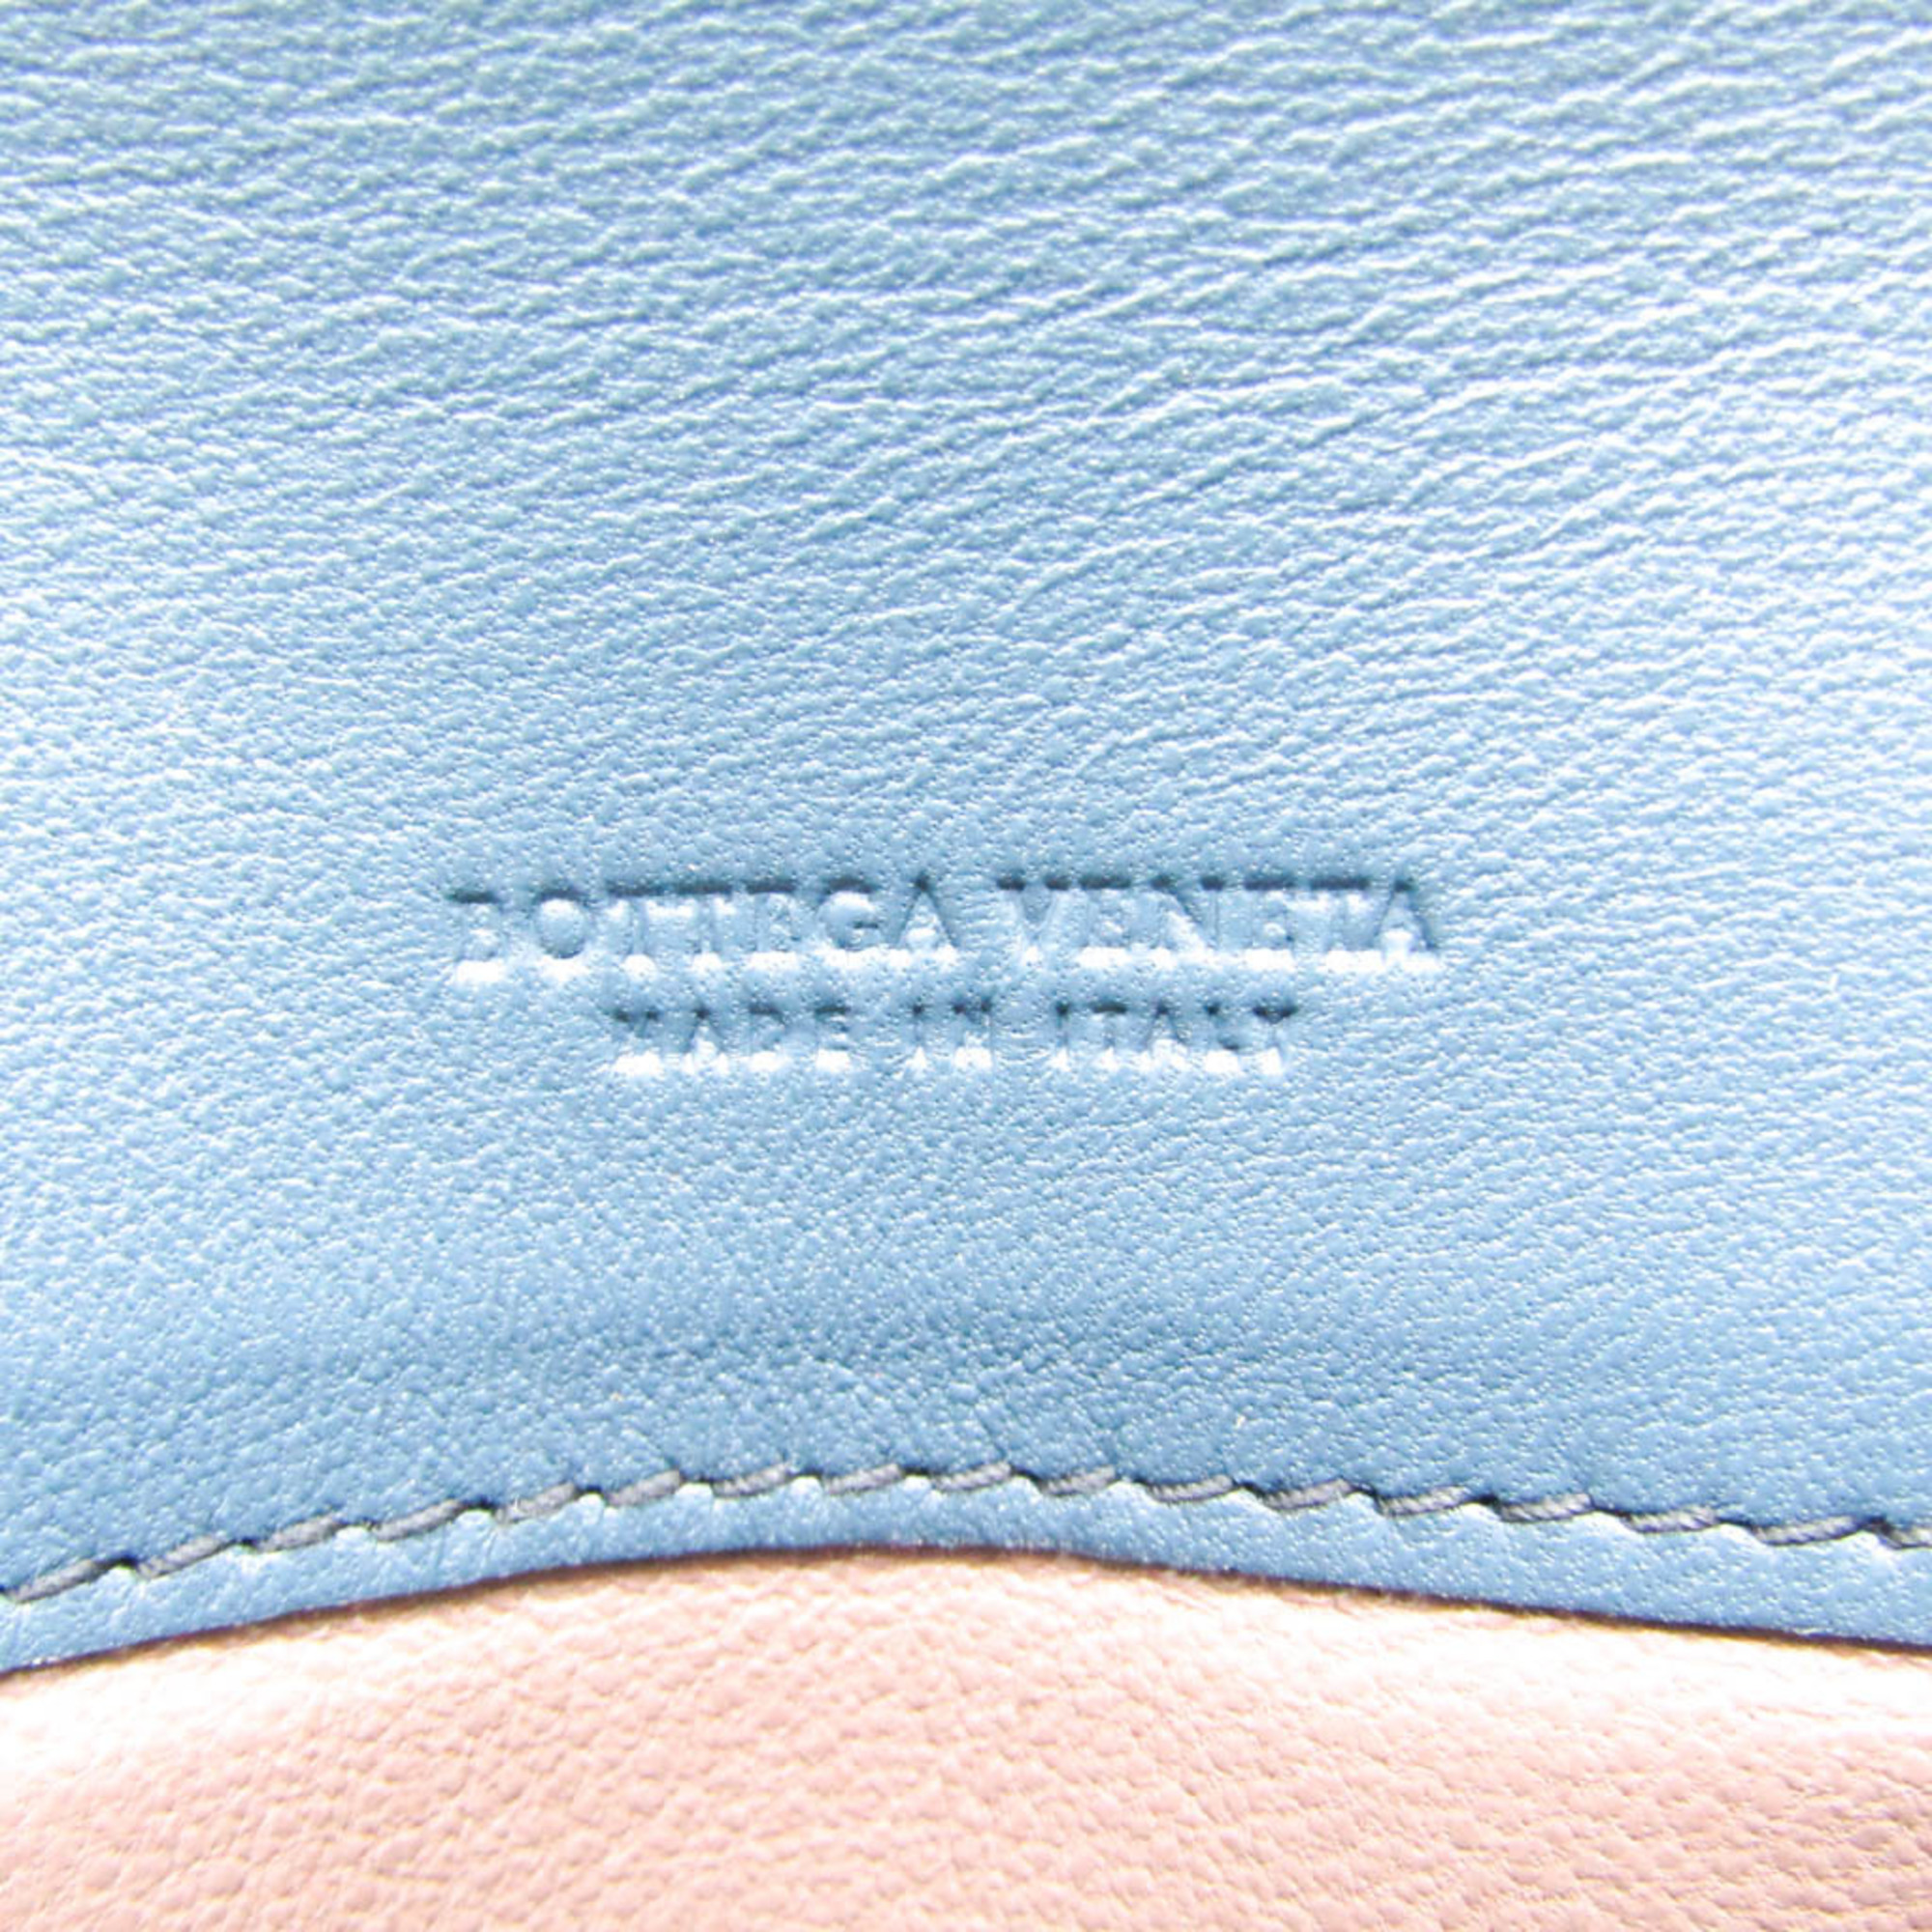 Bottega Veneta Men,Women Leather Long Wallet (bi-fold) Blue,Light Blue Gray